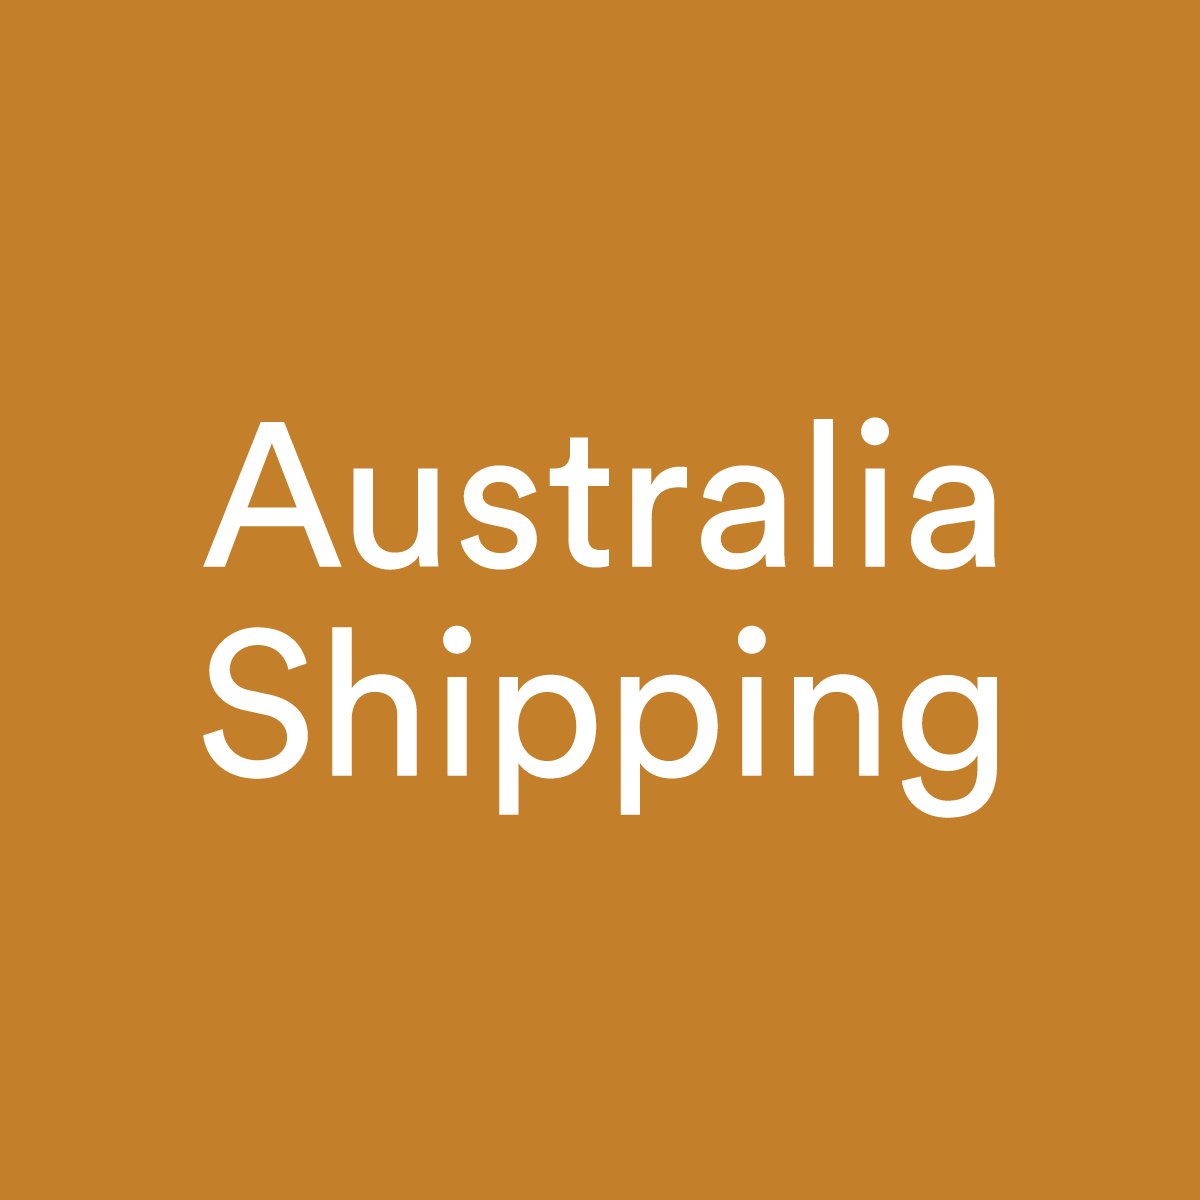 Australia Shipping